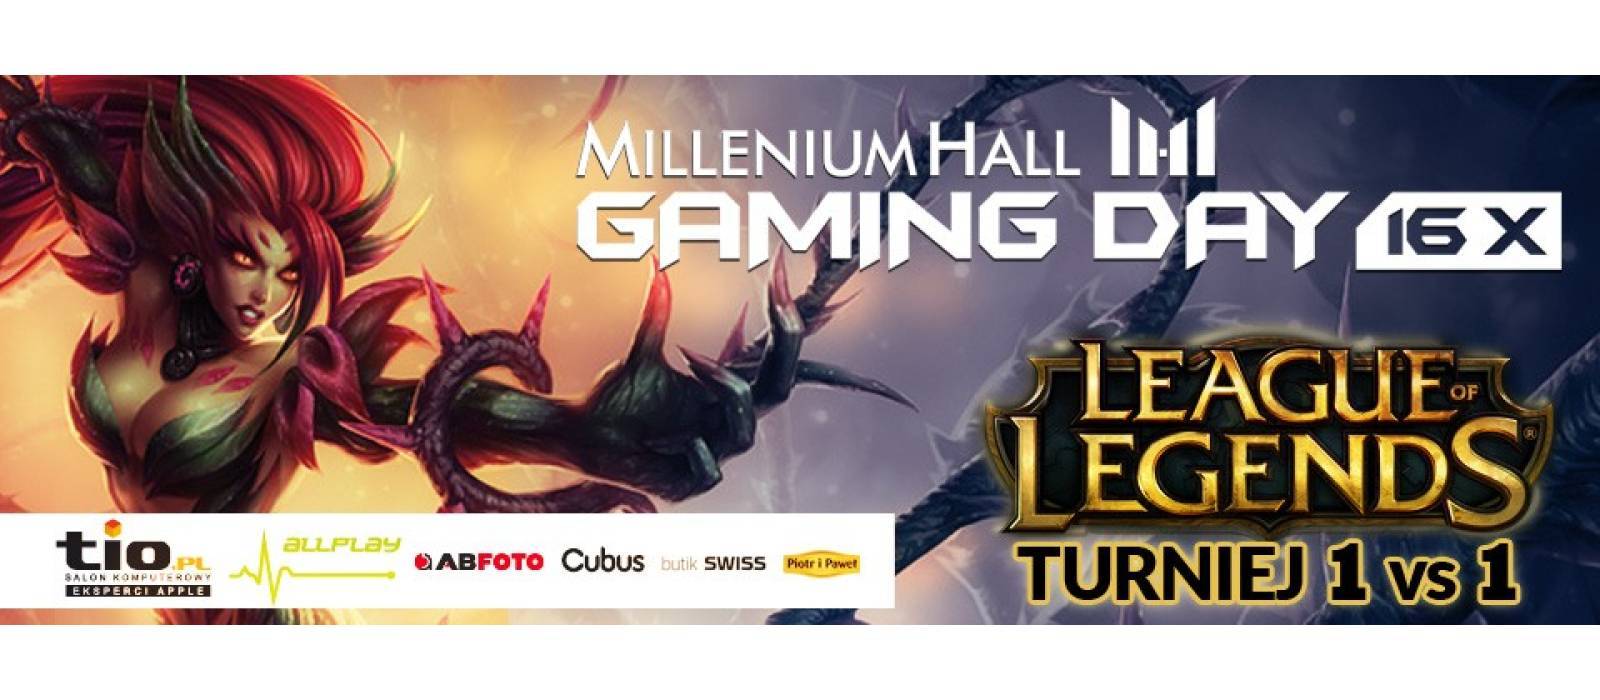 Millenium Hall Gaming Day - 1